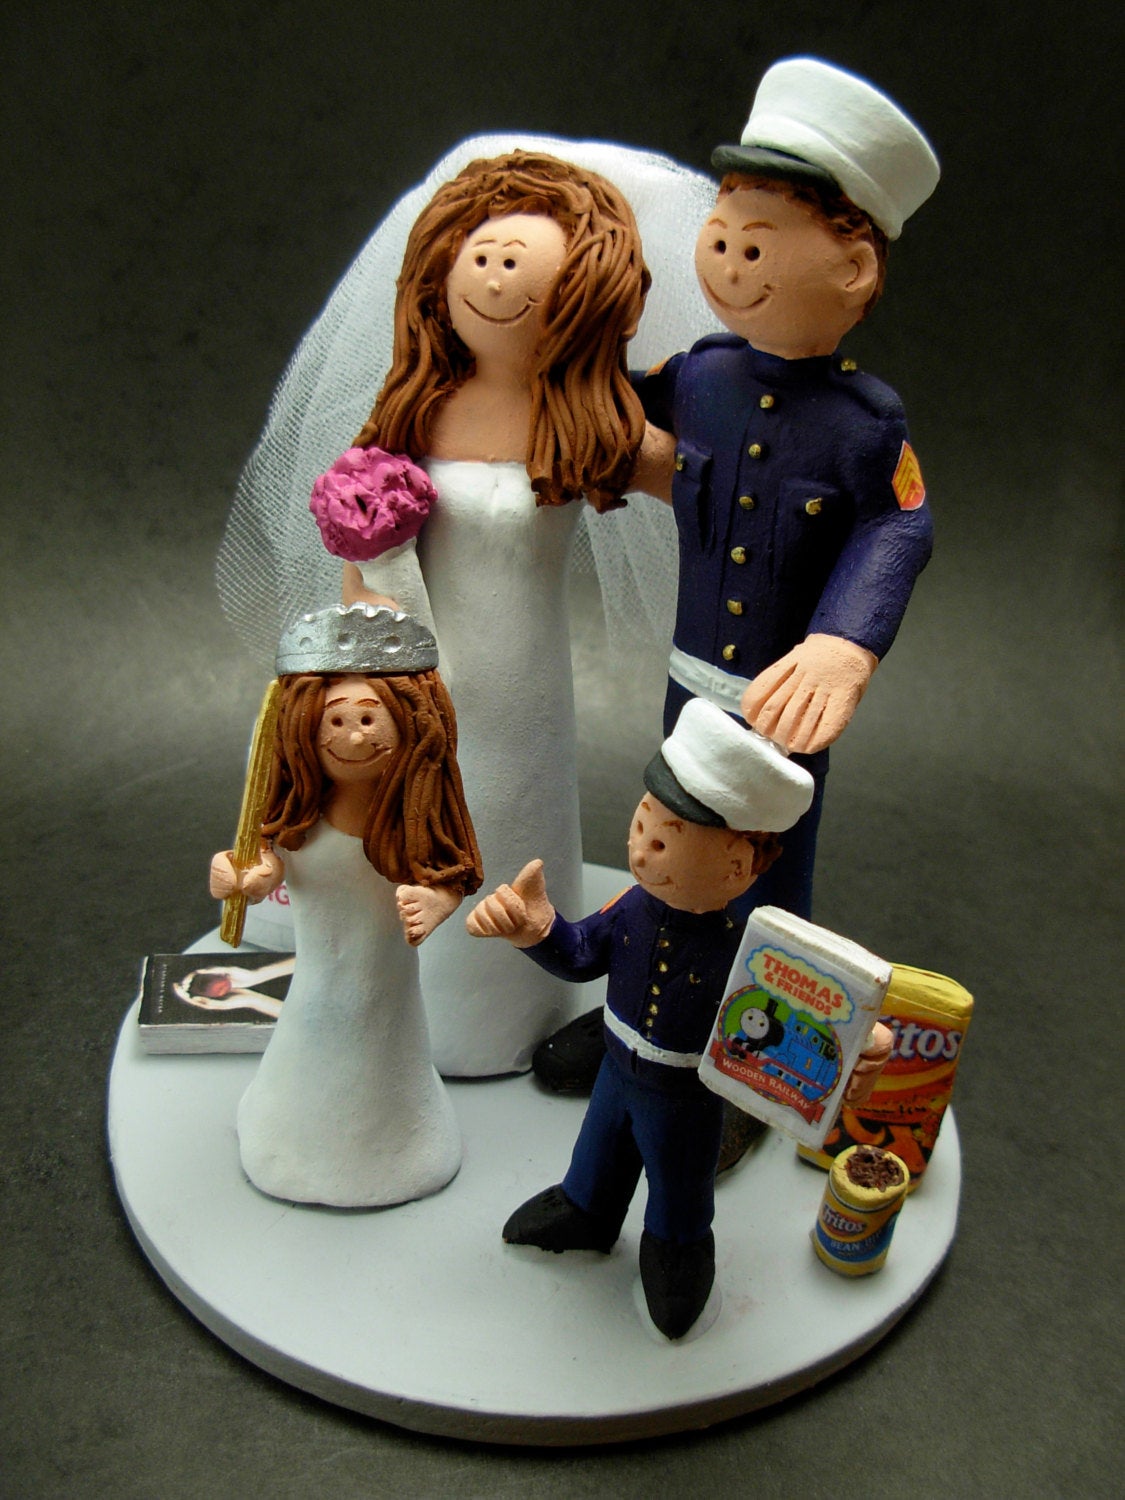 Mixed Race Family Wedding Cake Topper, Wedding CakeTopper with Kids, 2nd Marriage CakeTopper, Wedding CakeTopper with Children,family topper - iWeddingCakeToppers